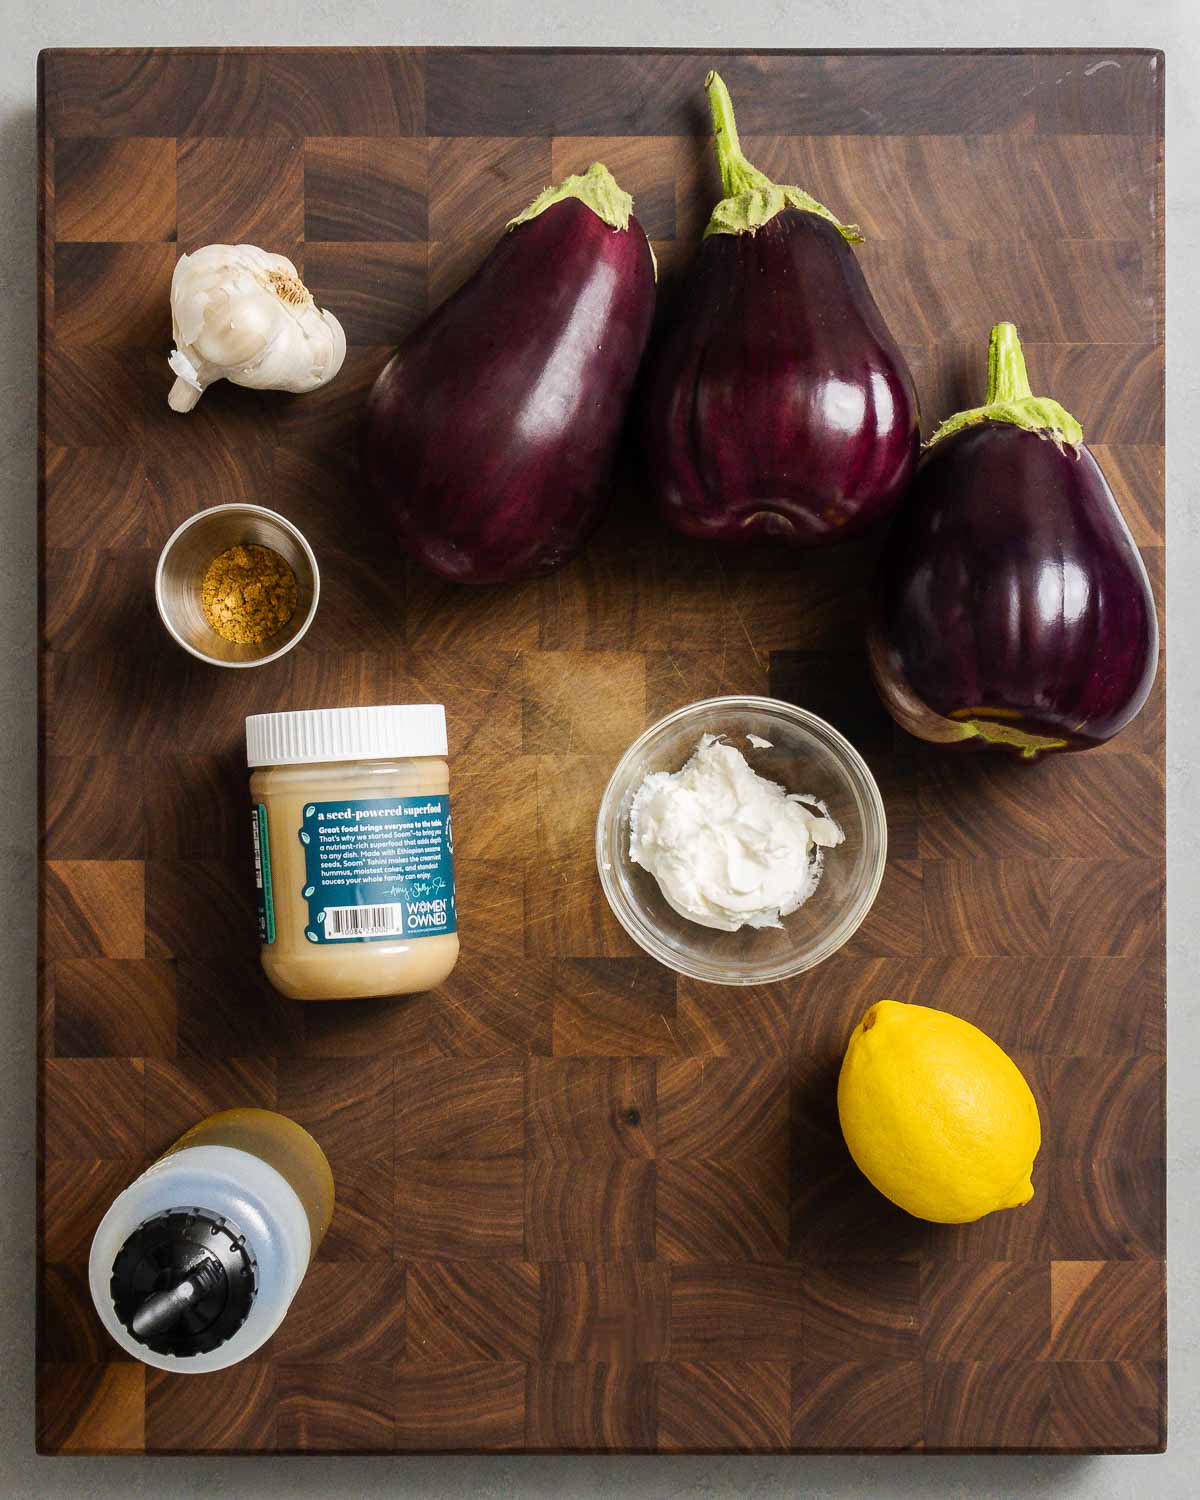 Ingredients shown: garlic, eggplants, cumin, tahini, Greek yogurt, extra virgin olive oil, and a lemon.